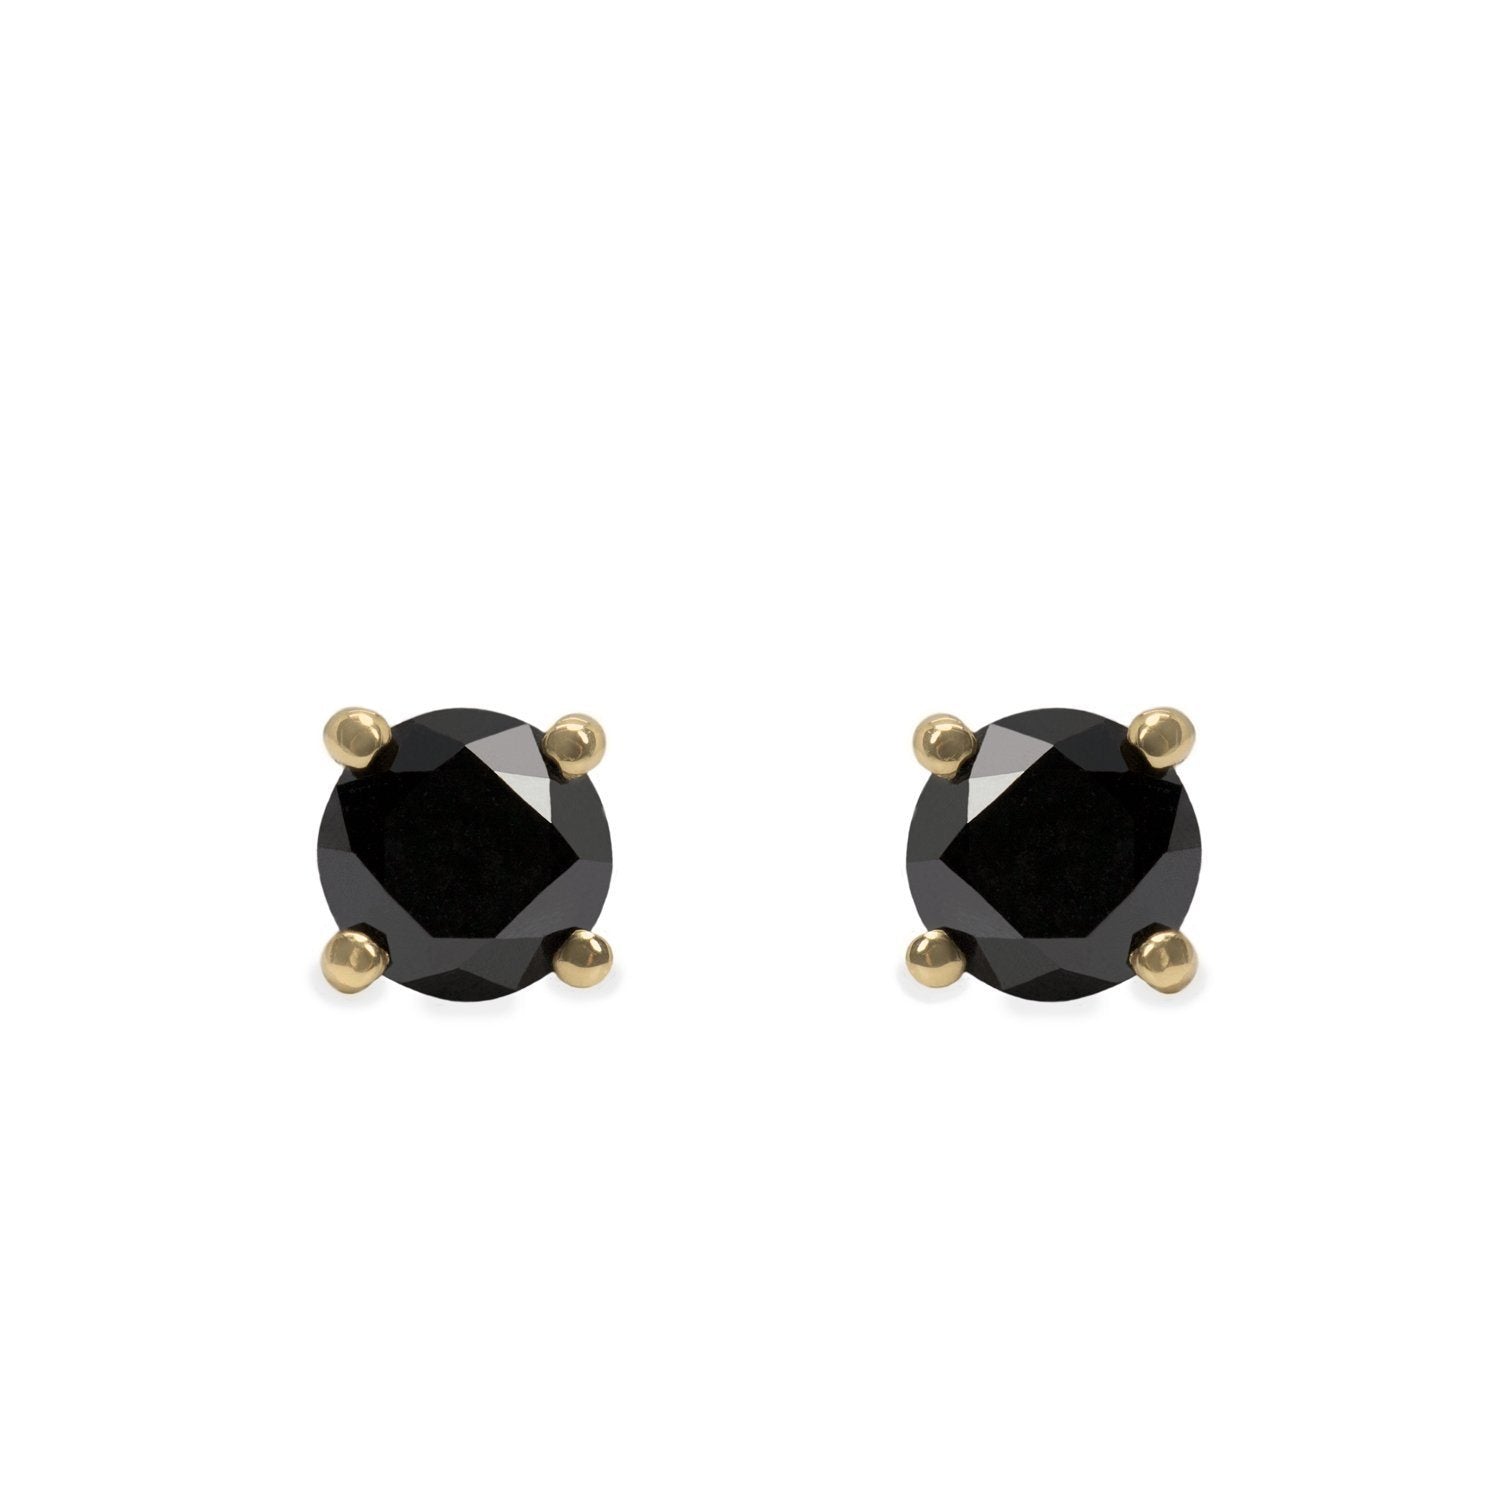 4 mm black diamond earrings